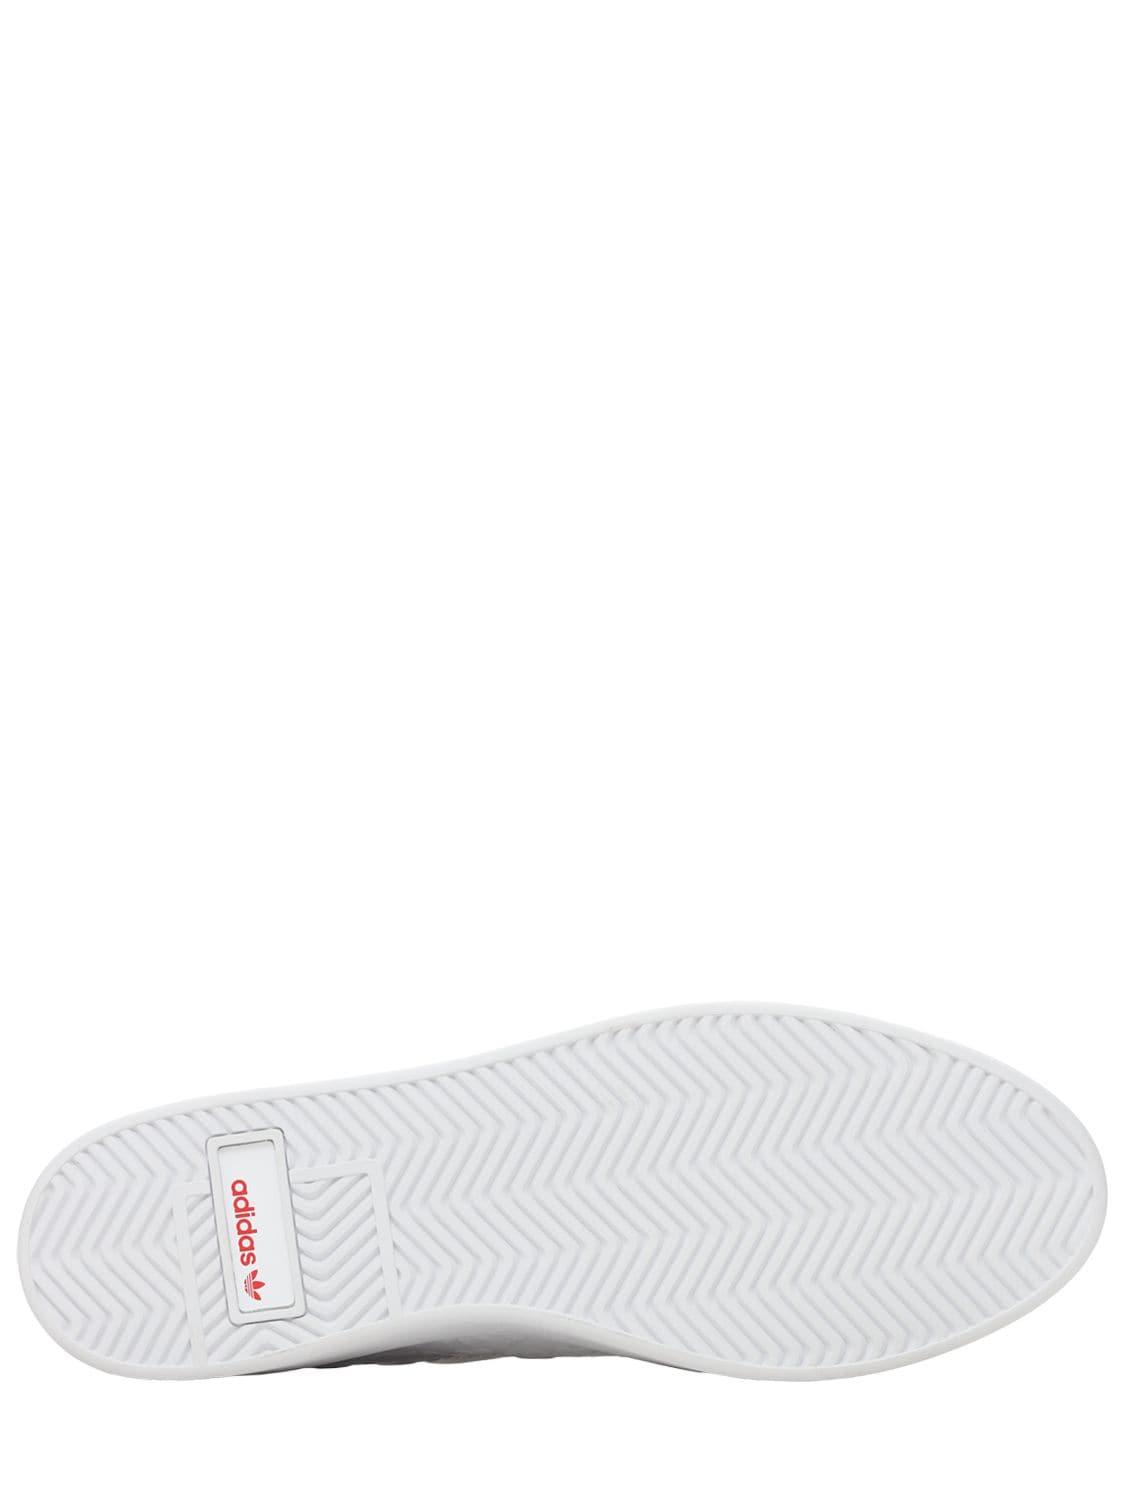 adidas Originals Valentines Sleek Leather Sneakers in White | Lyst